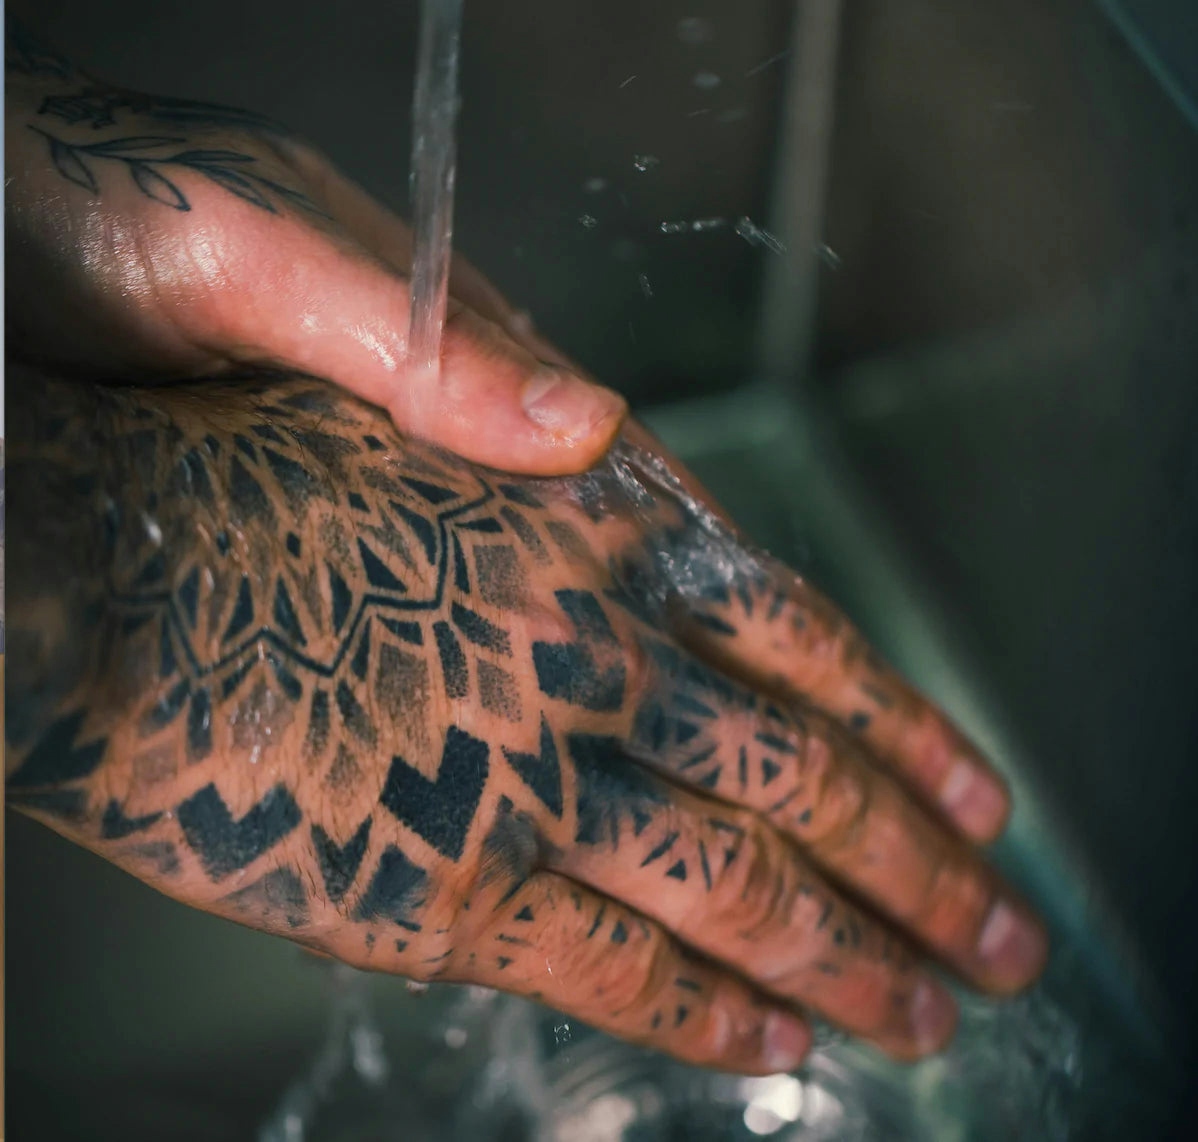 tattooed hands washing